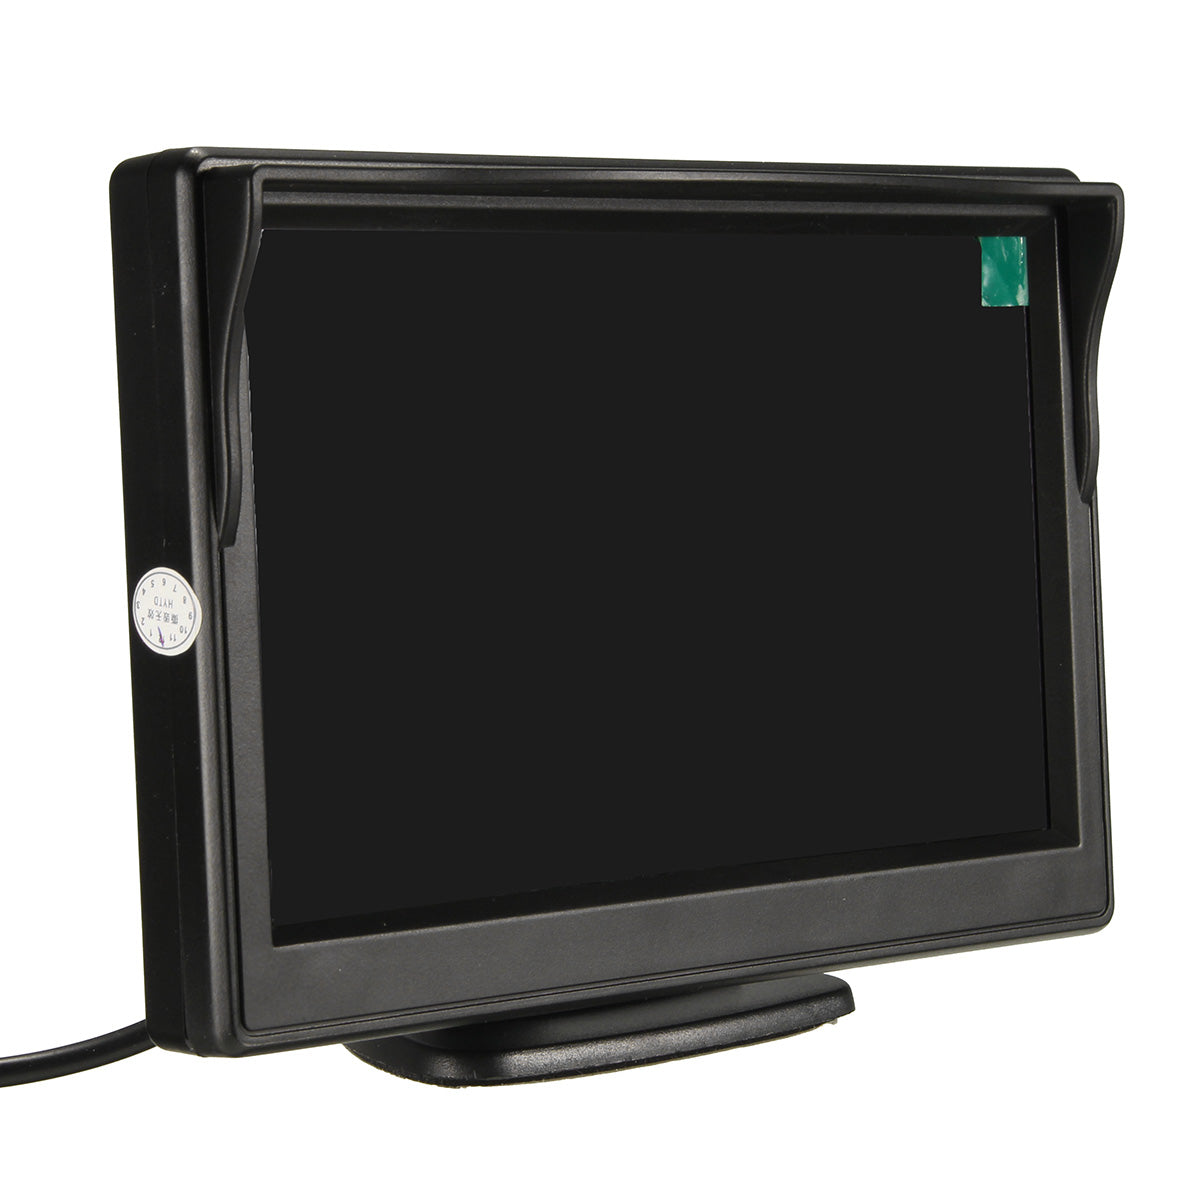 Black 5 Inch TFT LCD Car Rear View Backup Reverse Monitor Parking Night Vision LED Backlight Display Multimedia Player